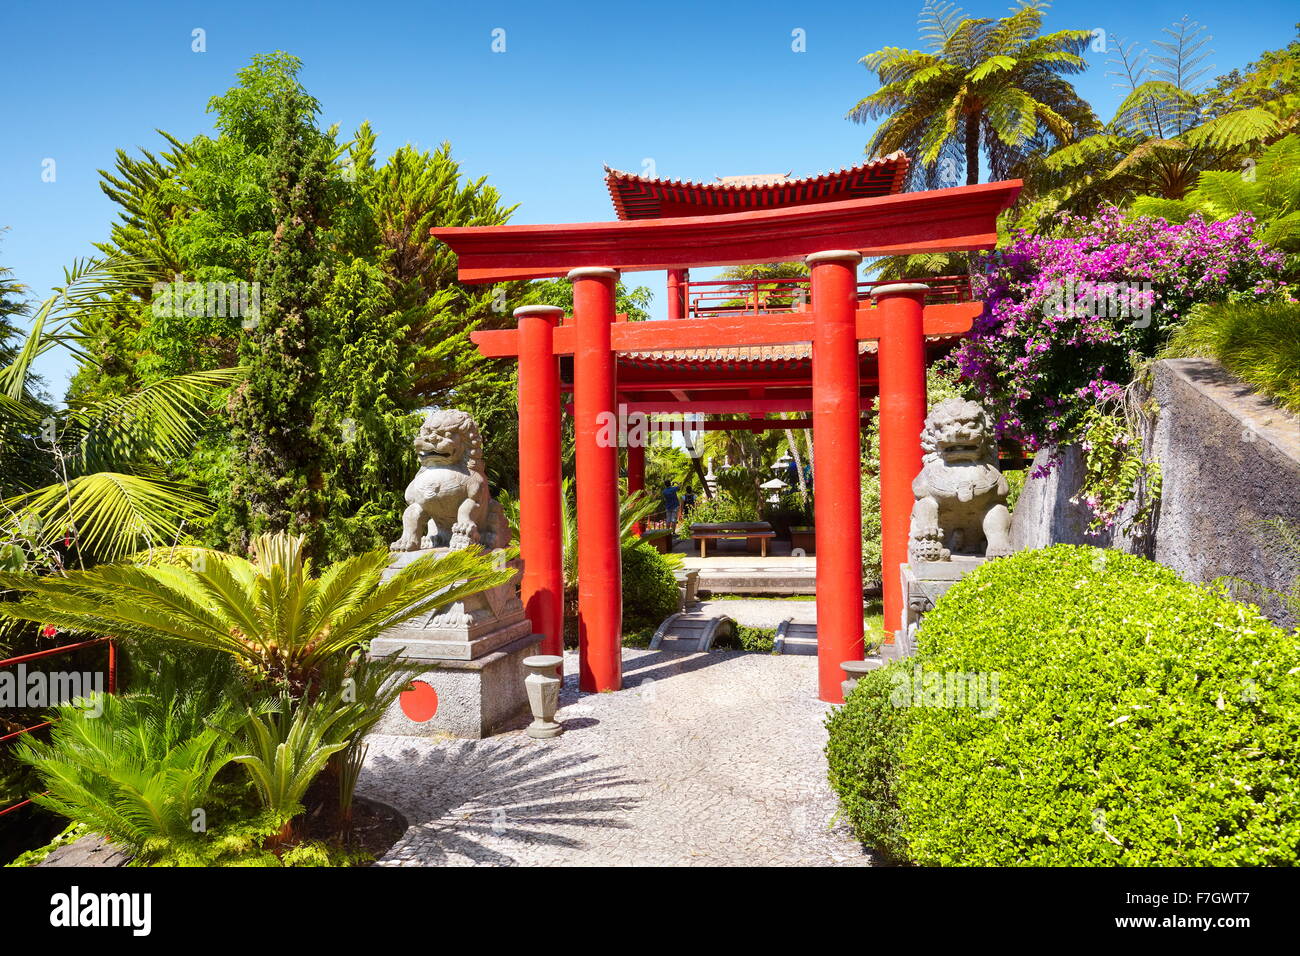 Monte Palace Tropical Garden (giardino Giapponese) - Monte, l'isola di Madeira, Portogallo Foto Stock